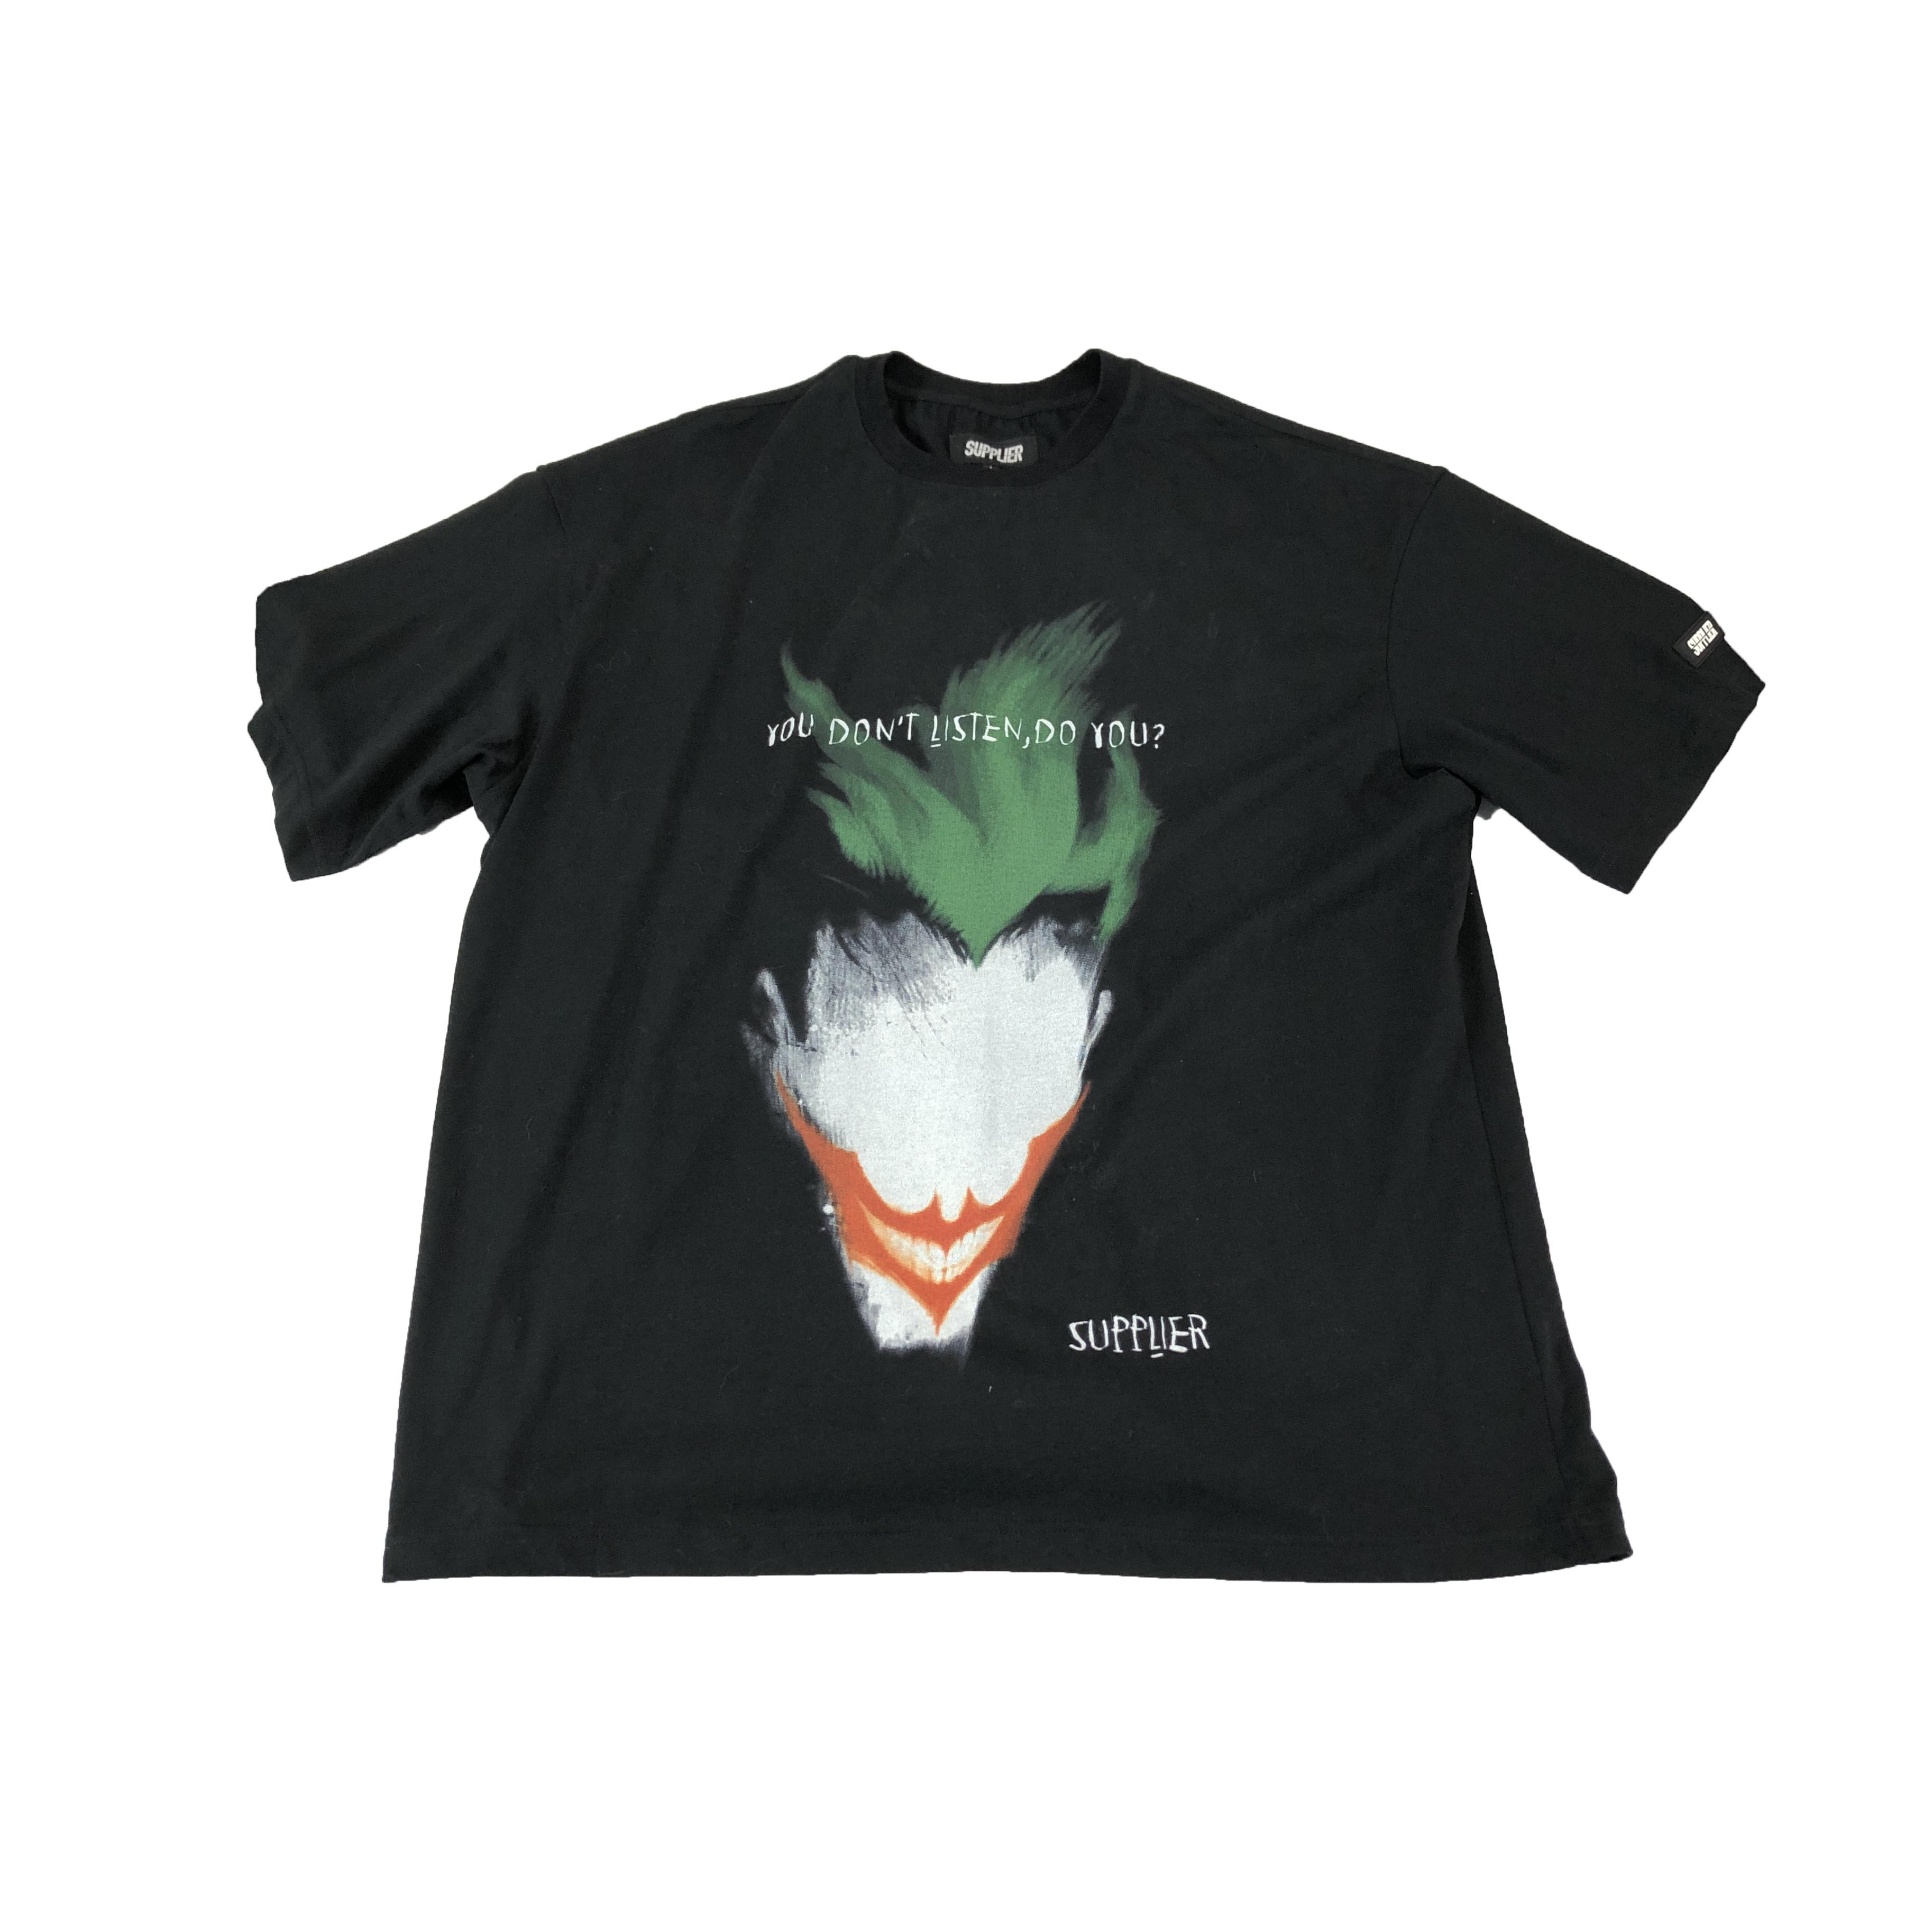 [Supplier] Joker Tshirt - Size L